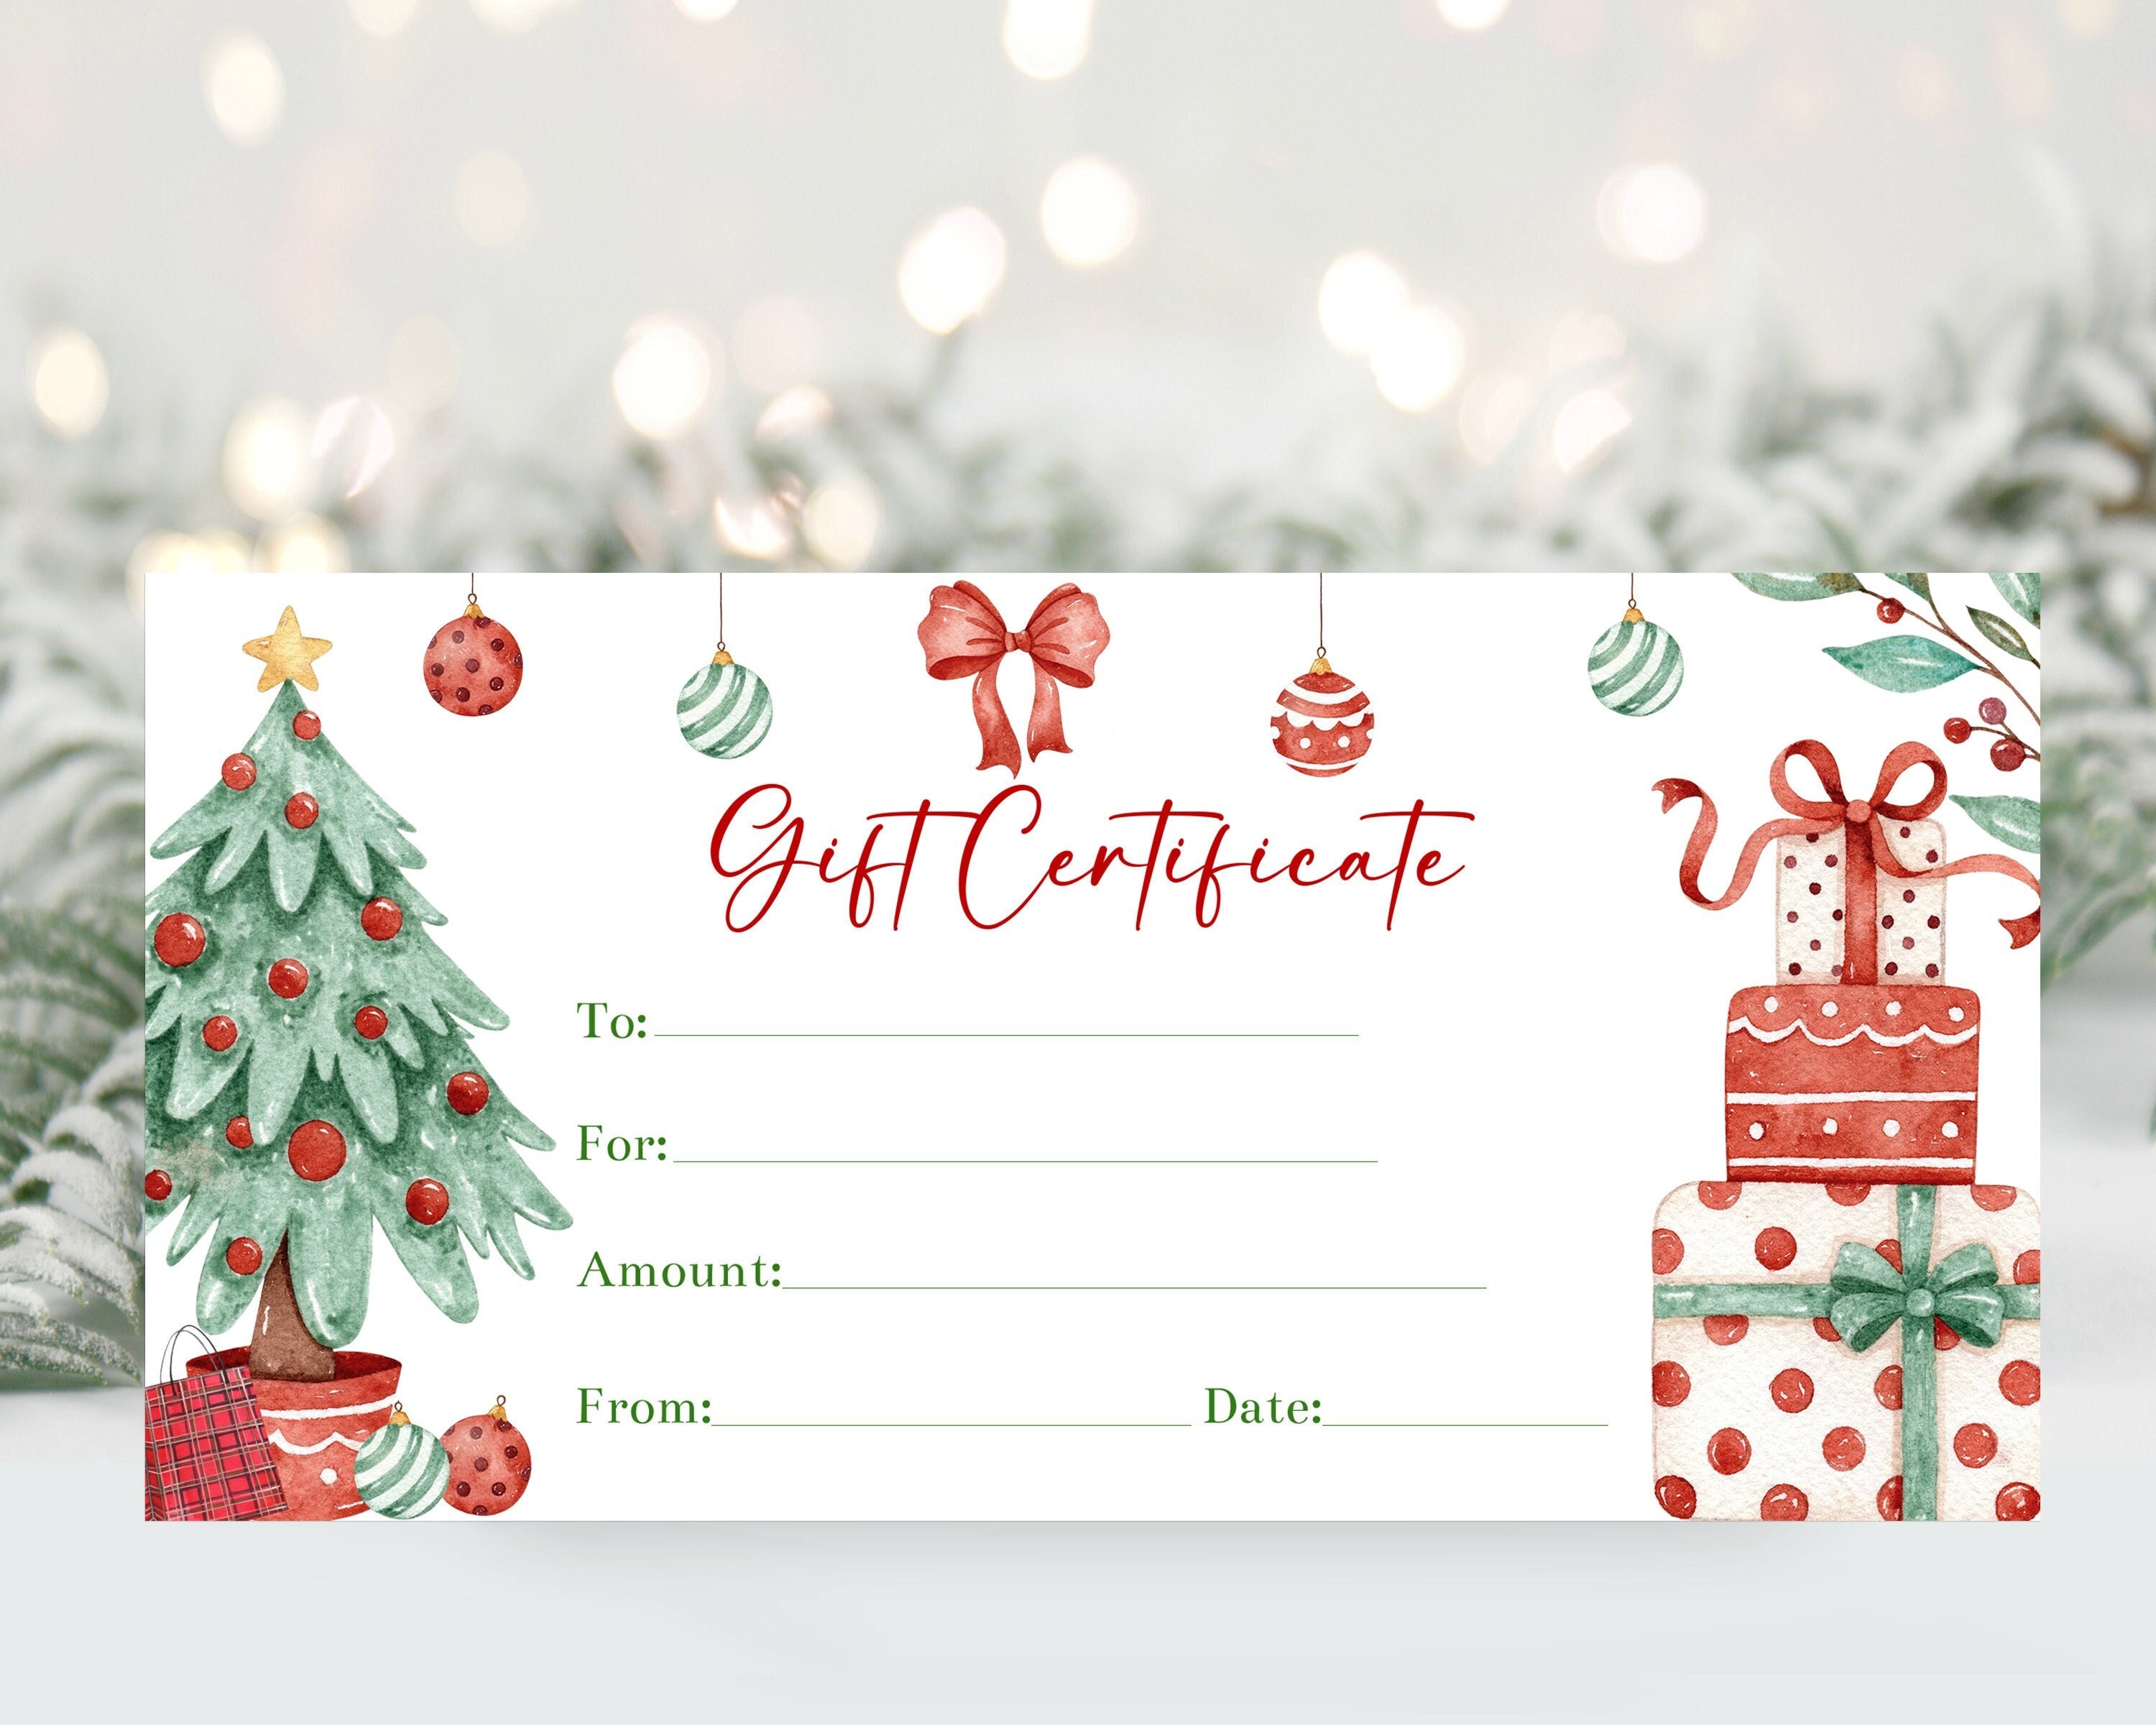 Christmas Gift Certificate Voucher Template, Editable Christmas